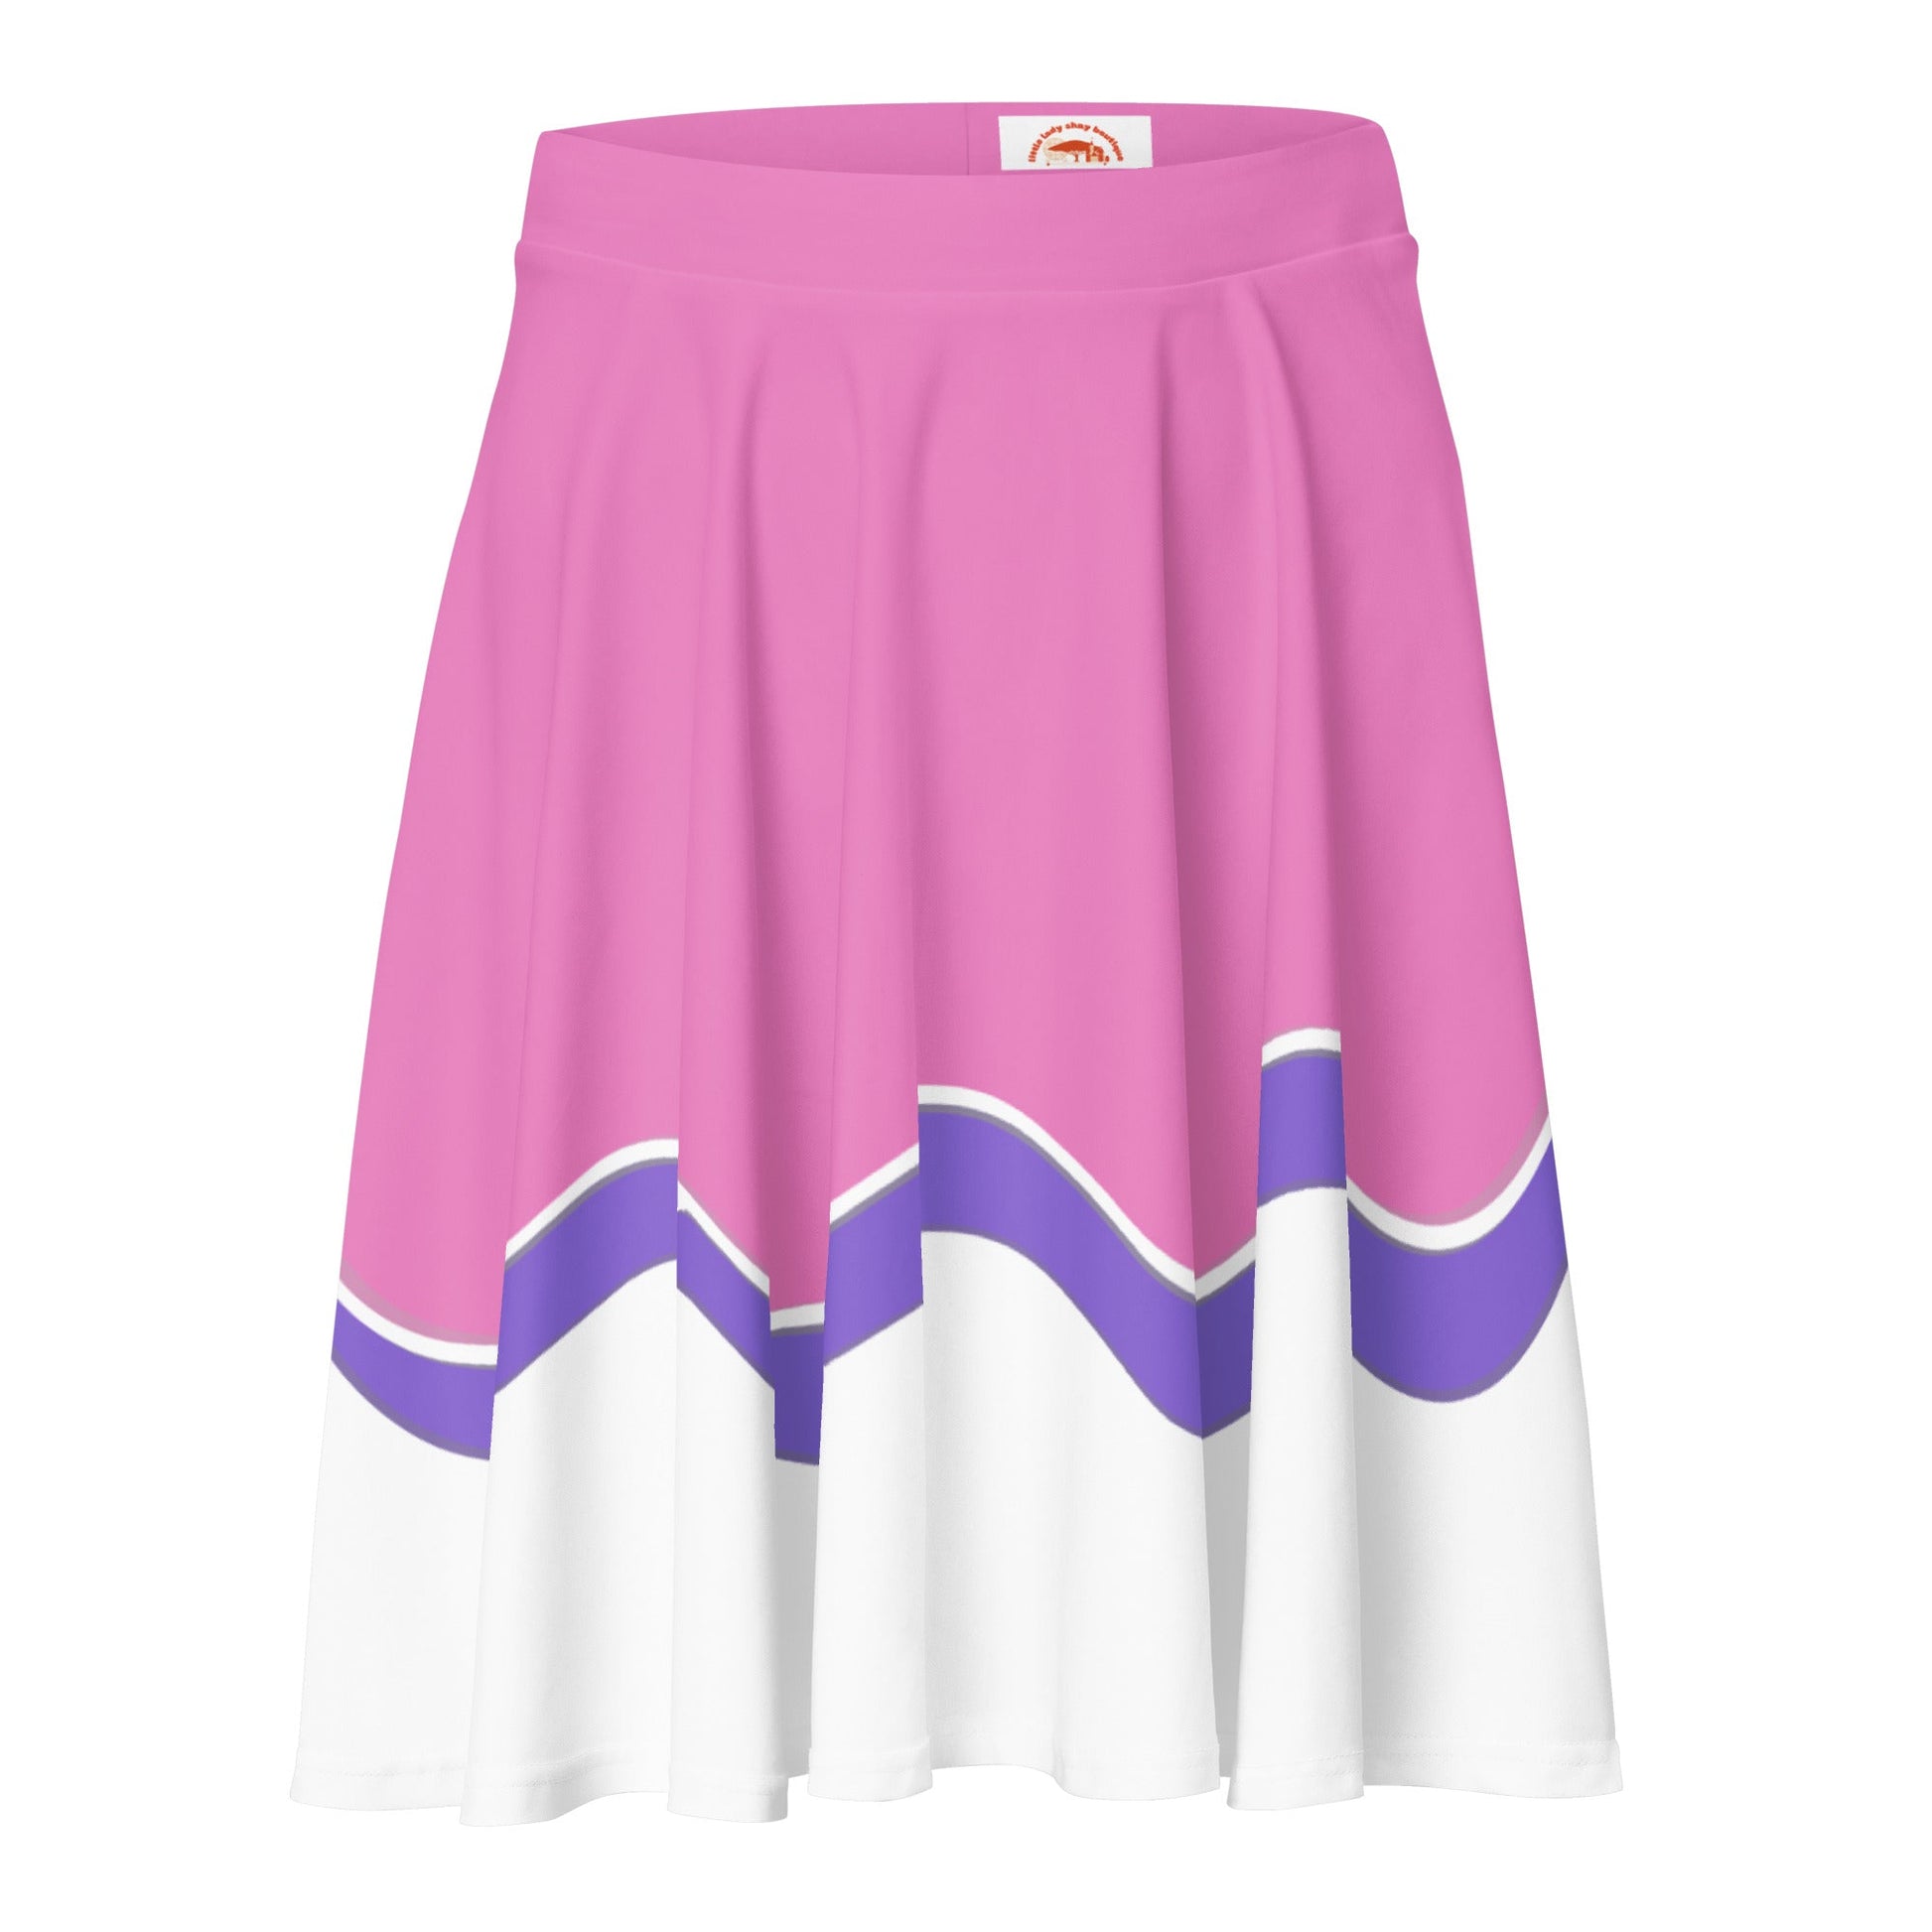 The Daisy Skater Skirt active wearadult disneycosplay#tag4##tag5##tag6#